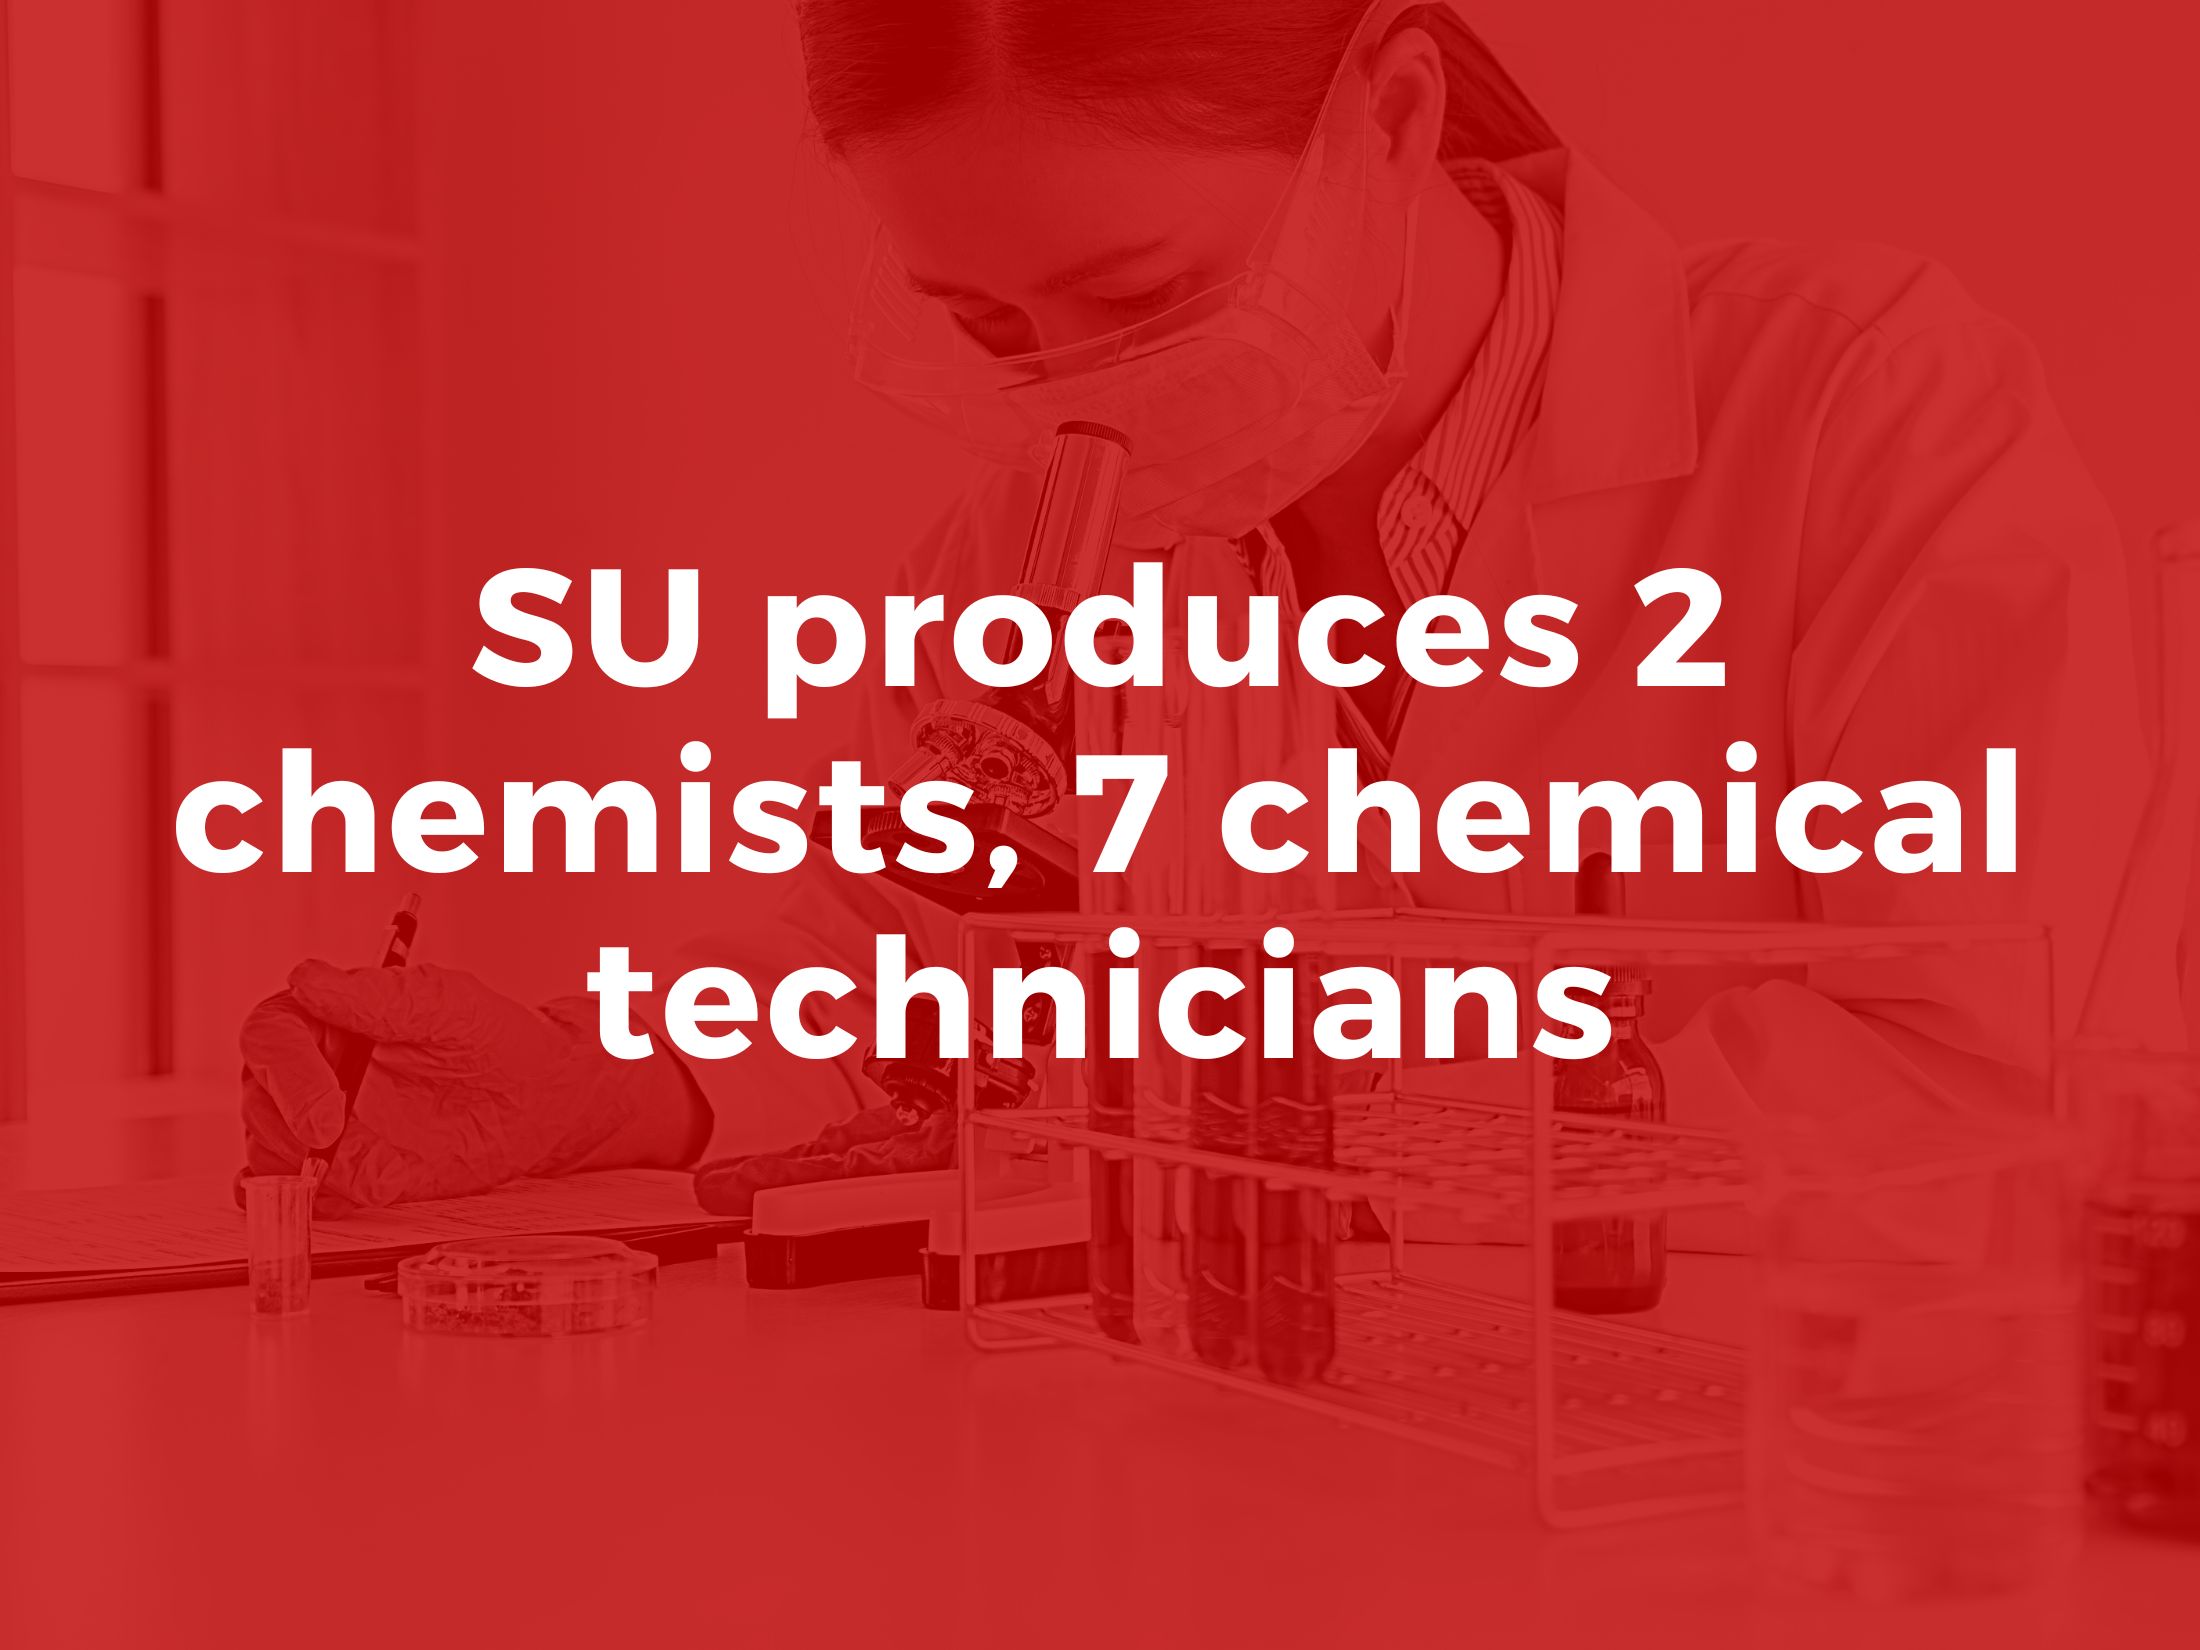 SU produces 2 chemists, 7 chemical technicians